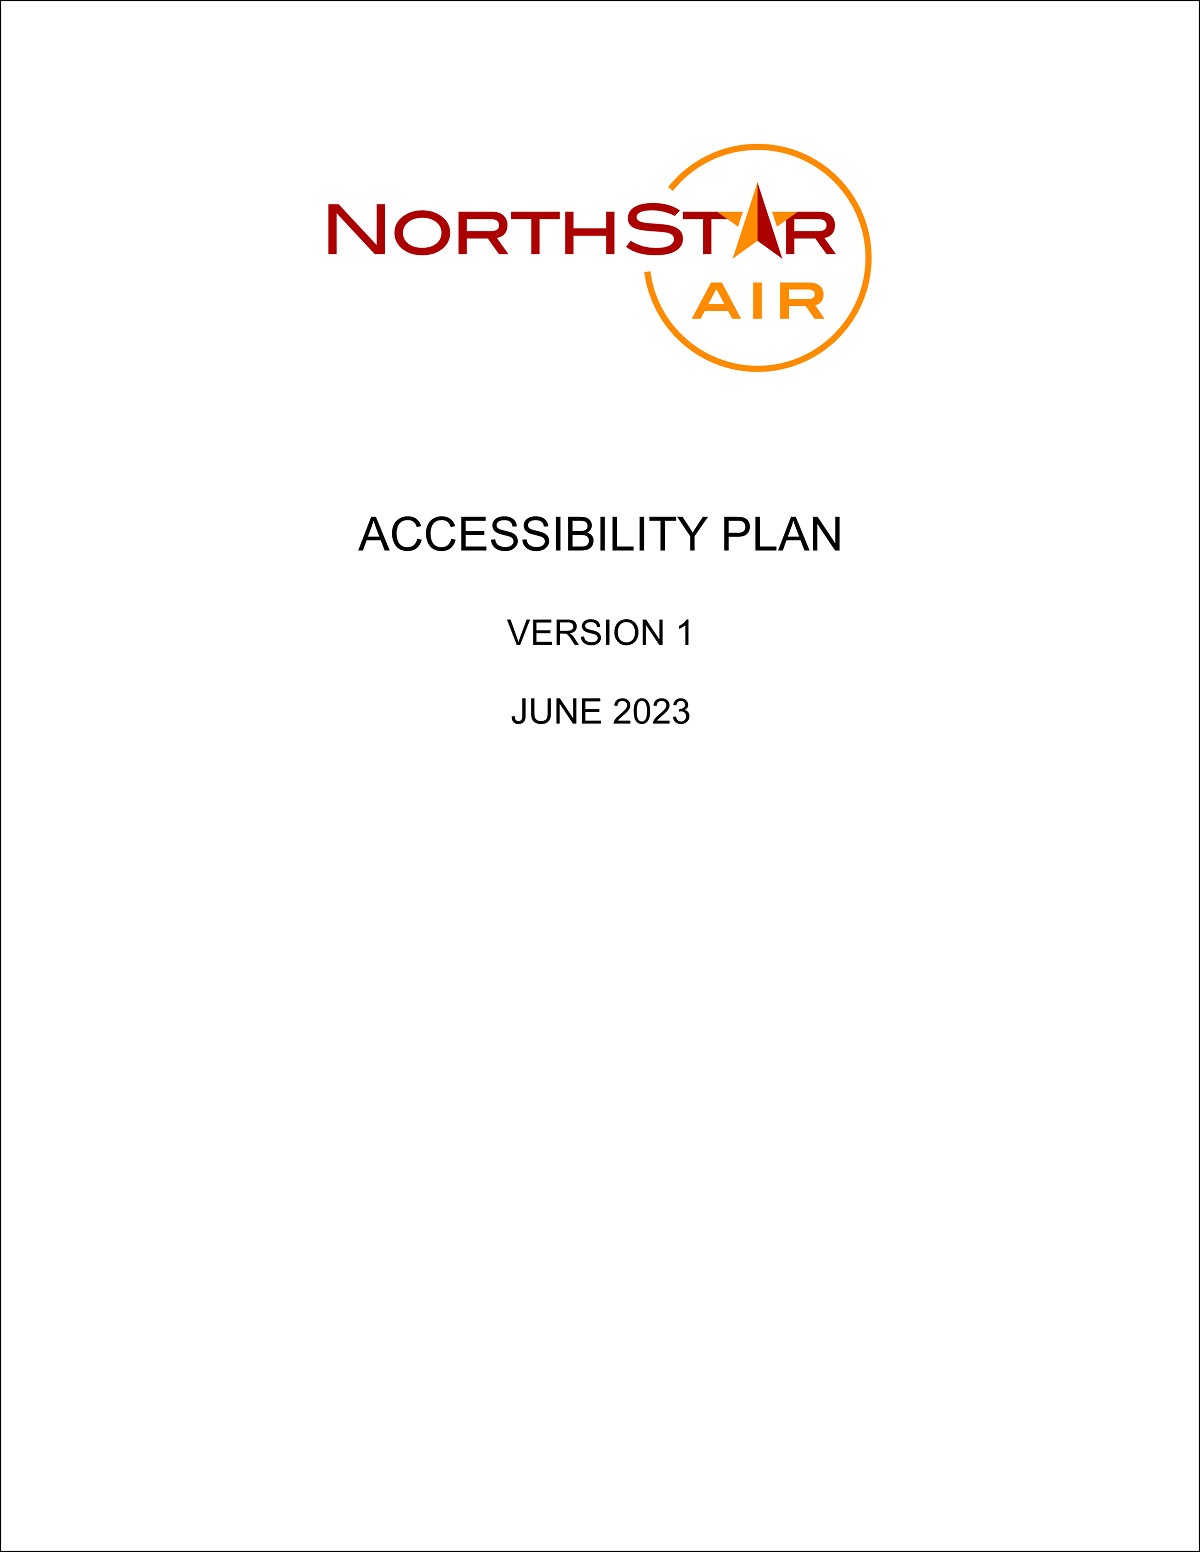 nsa-accessibility-june-2023